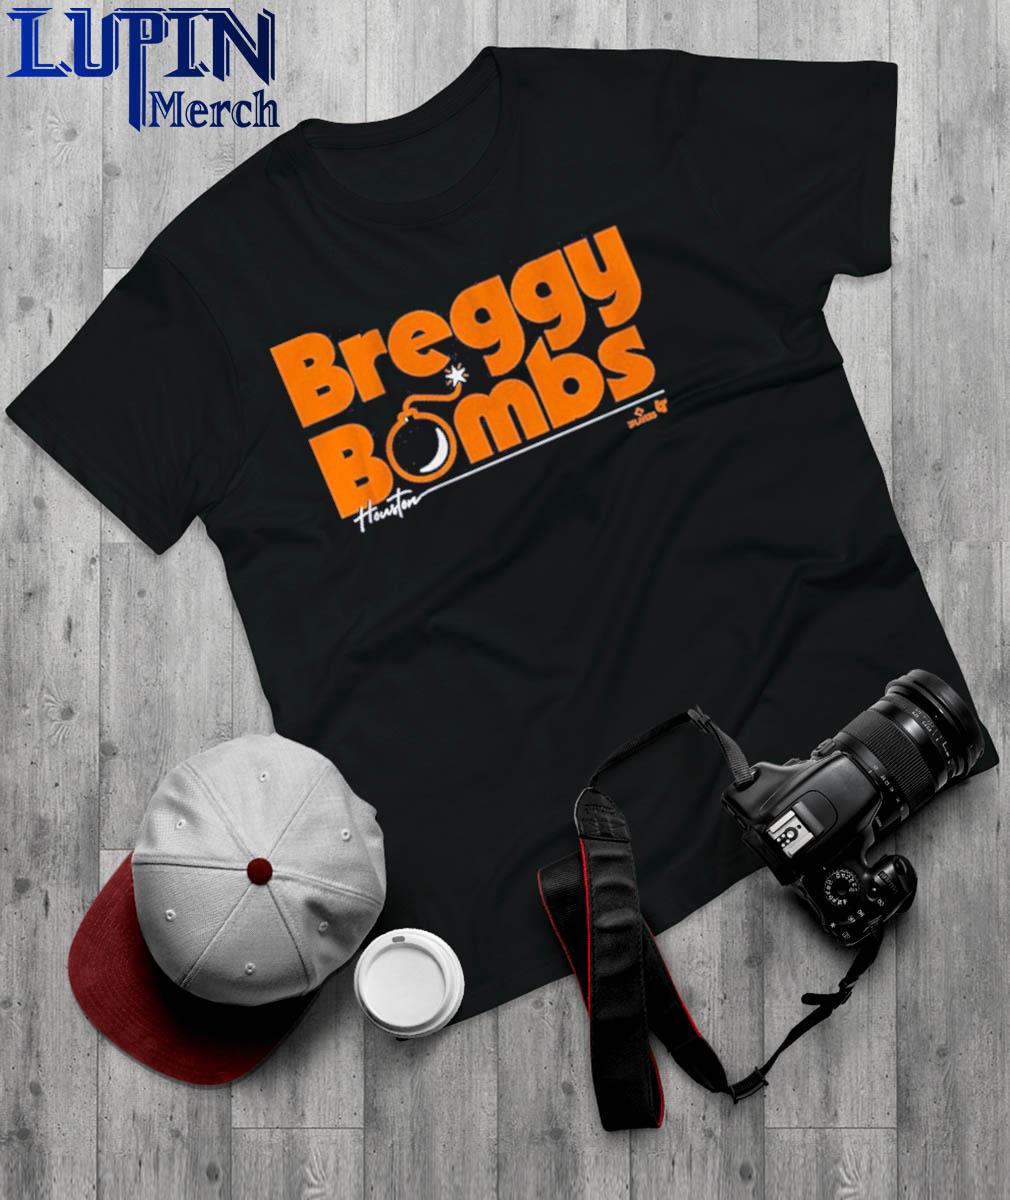 Alex Bregman Breggy Bombs Shirt, hoodie, sweater, long sleeve and tank top